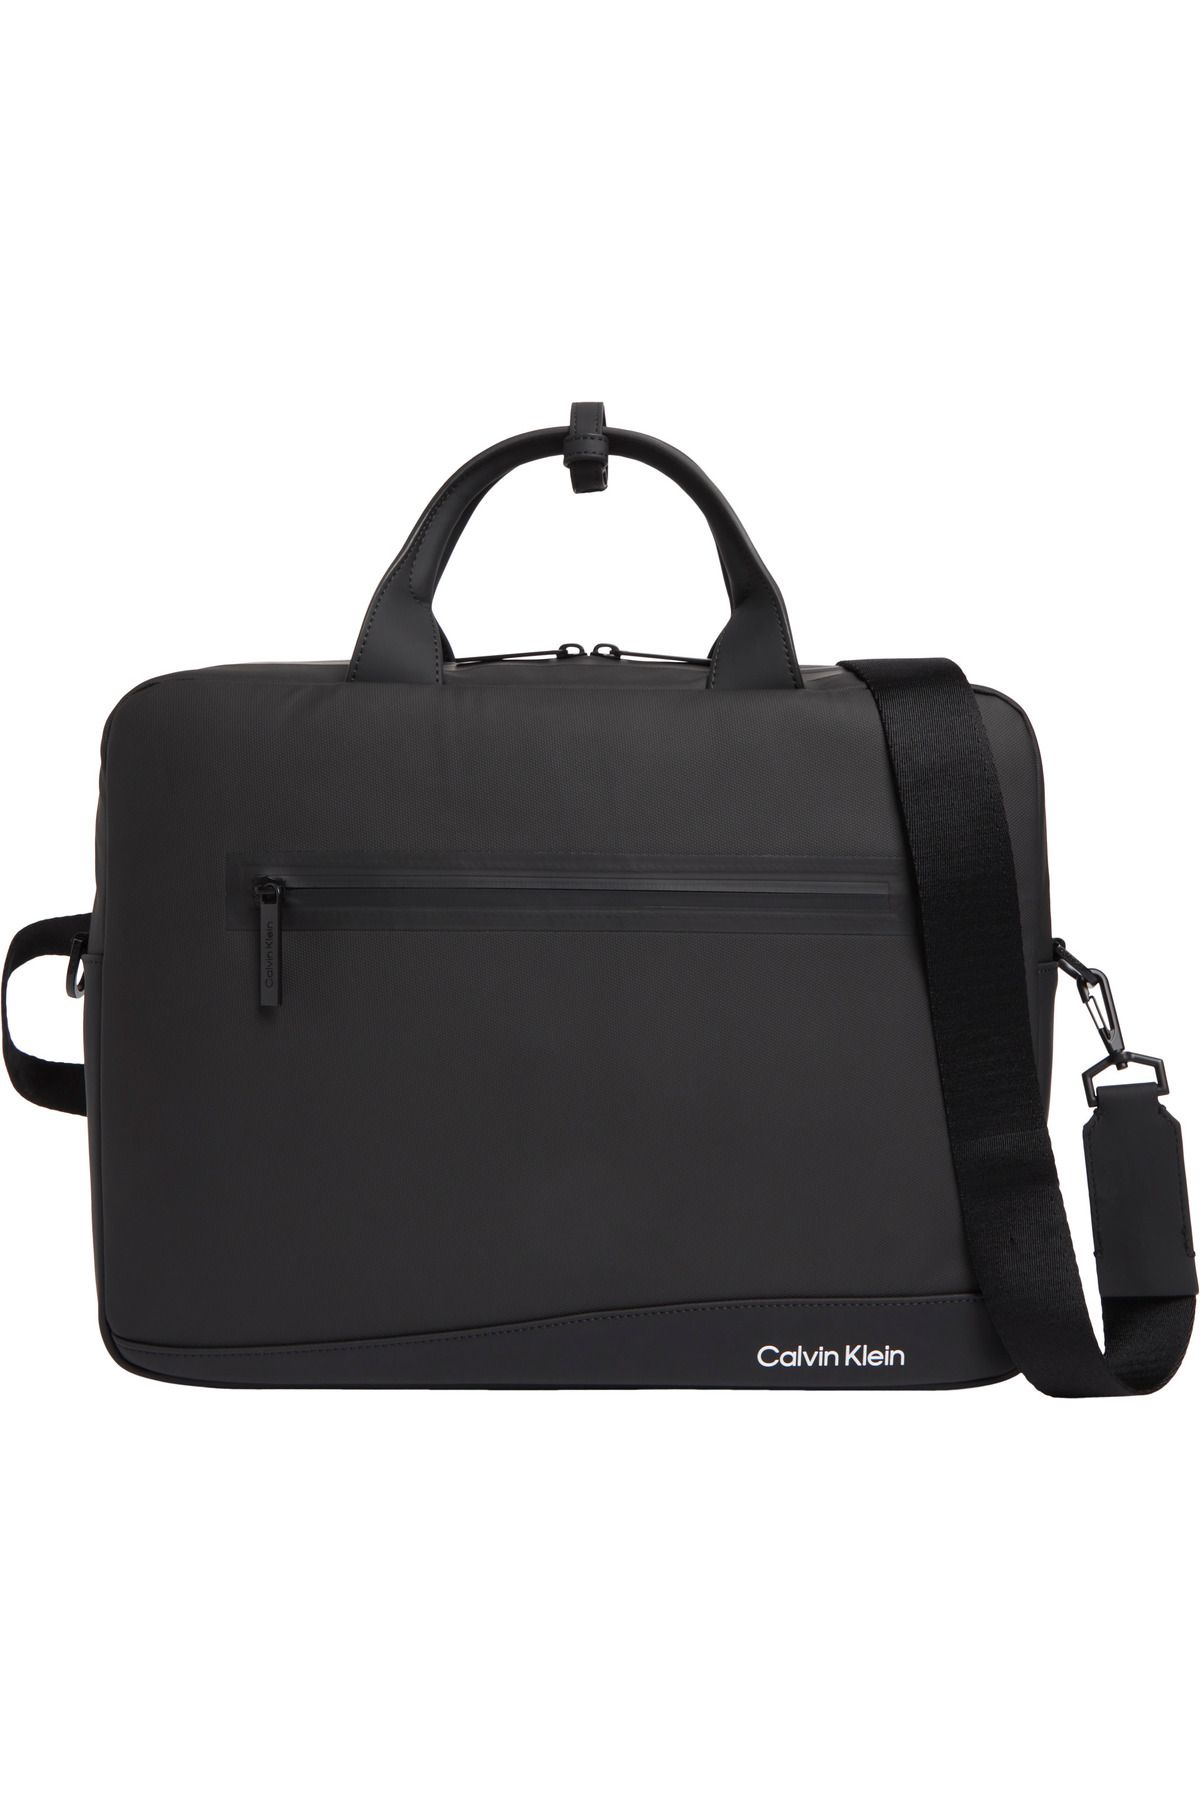 Calvin Klein RUBBERIZED CONV LAPTOP BAG